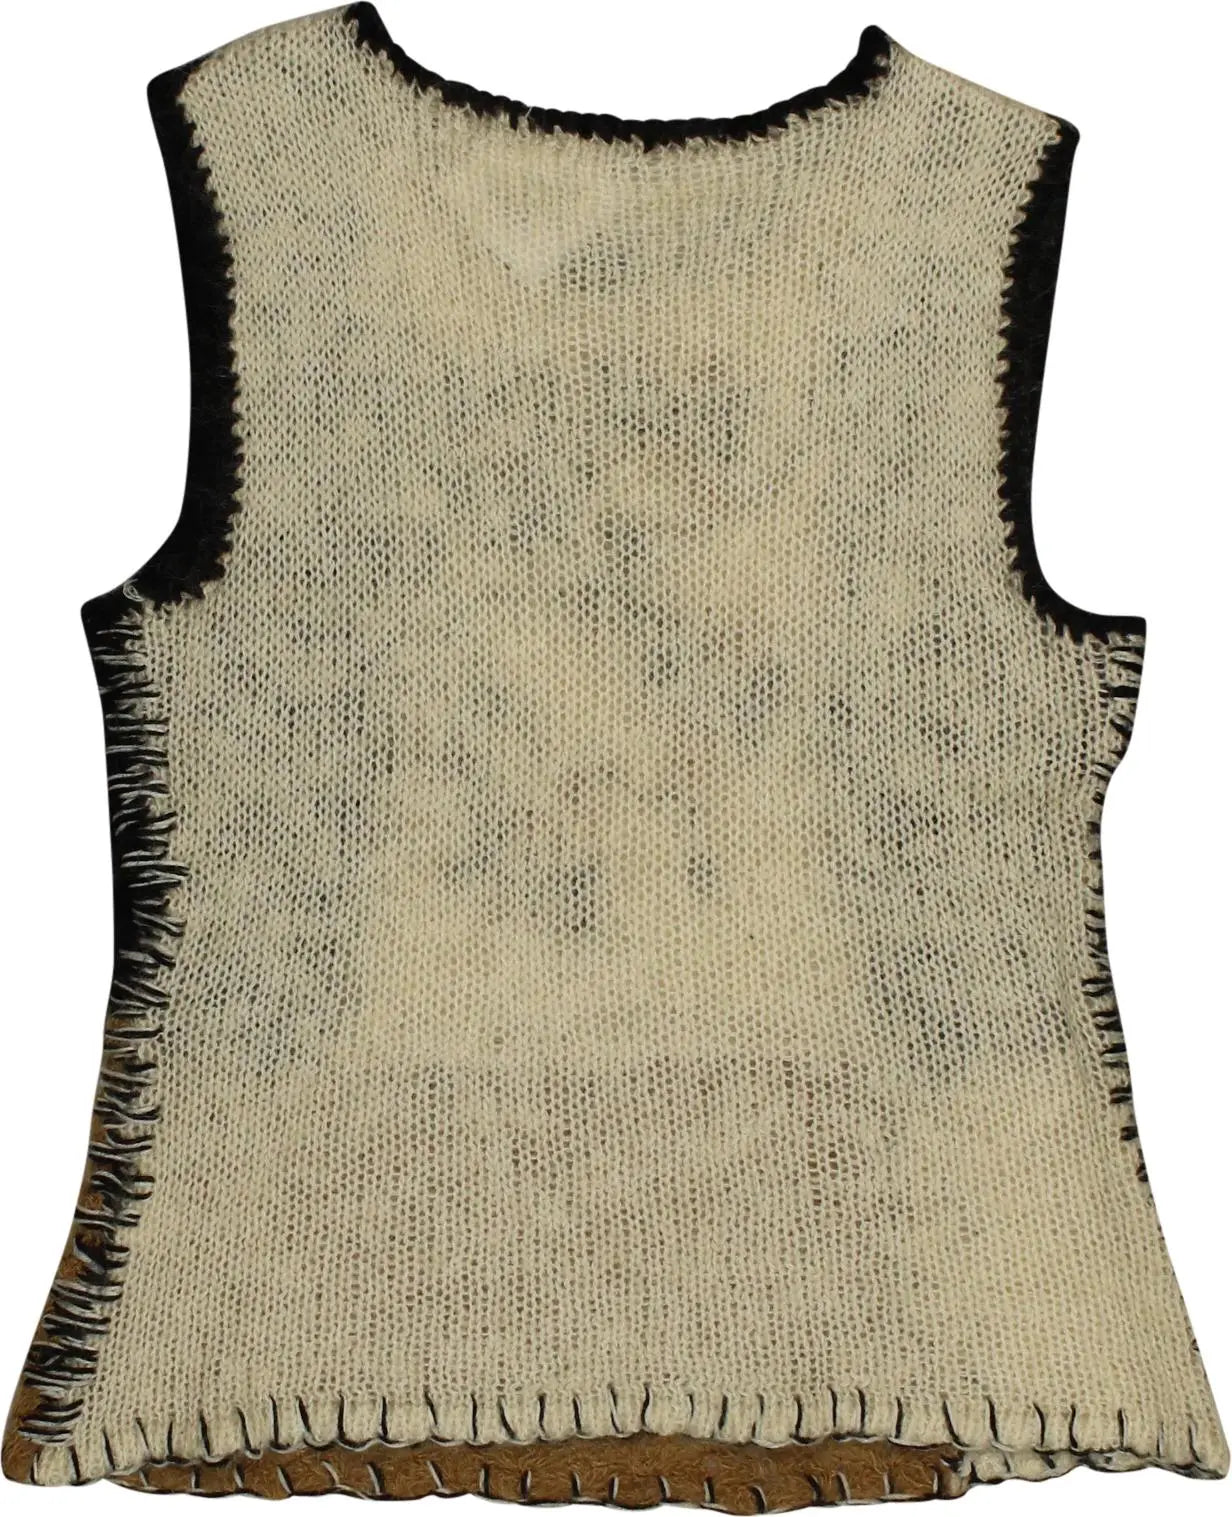 Handmade - Handmade Vest- ThriftTale.com - Vintage and second handclothing